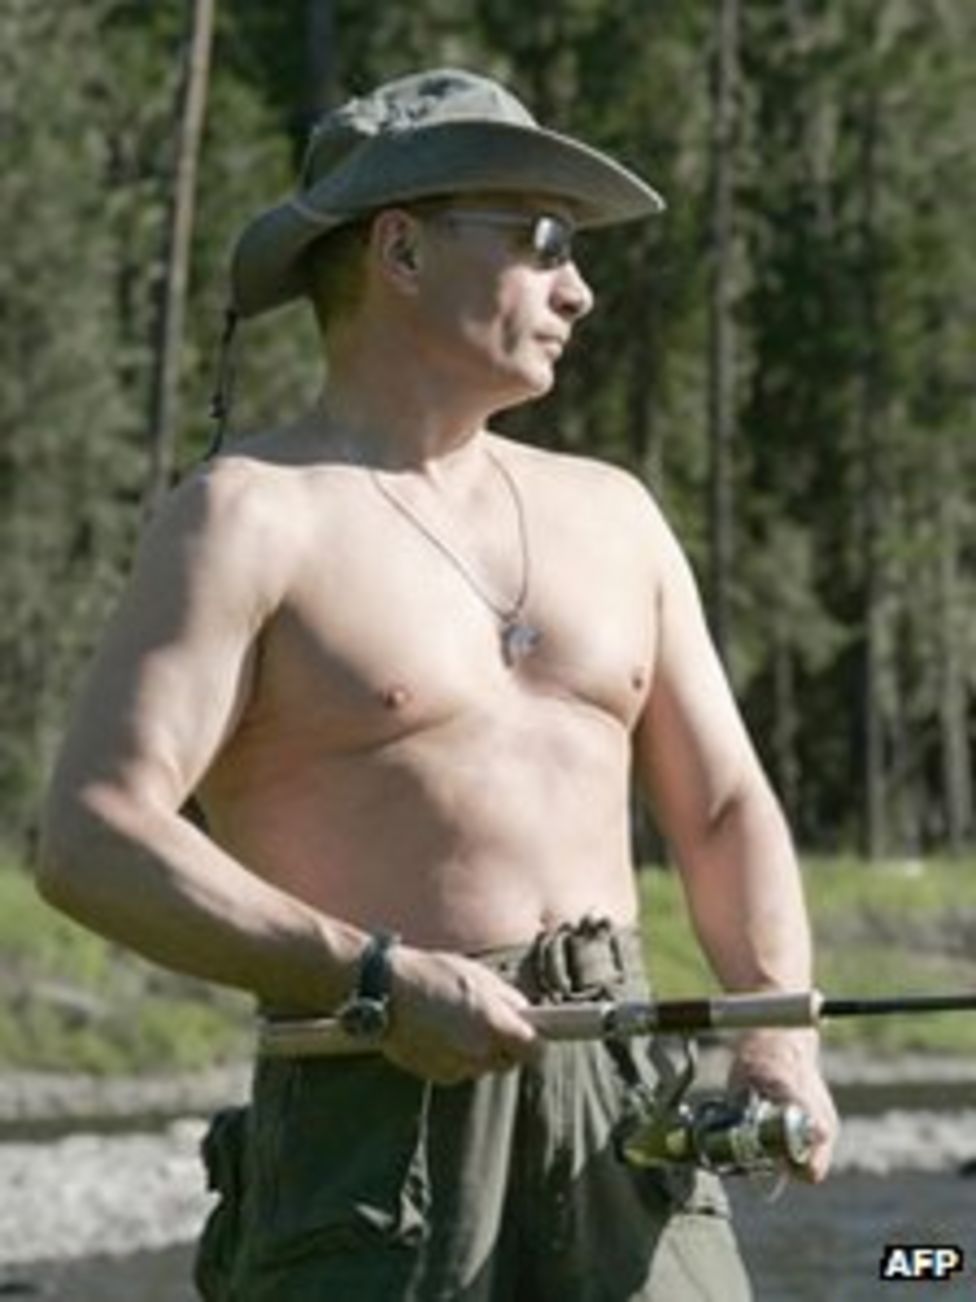 Russia election Putin adverts woo 'virgin' voters BBC News